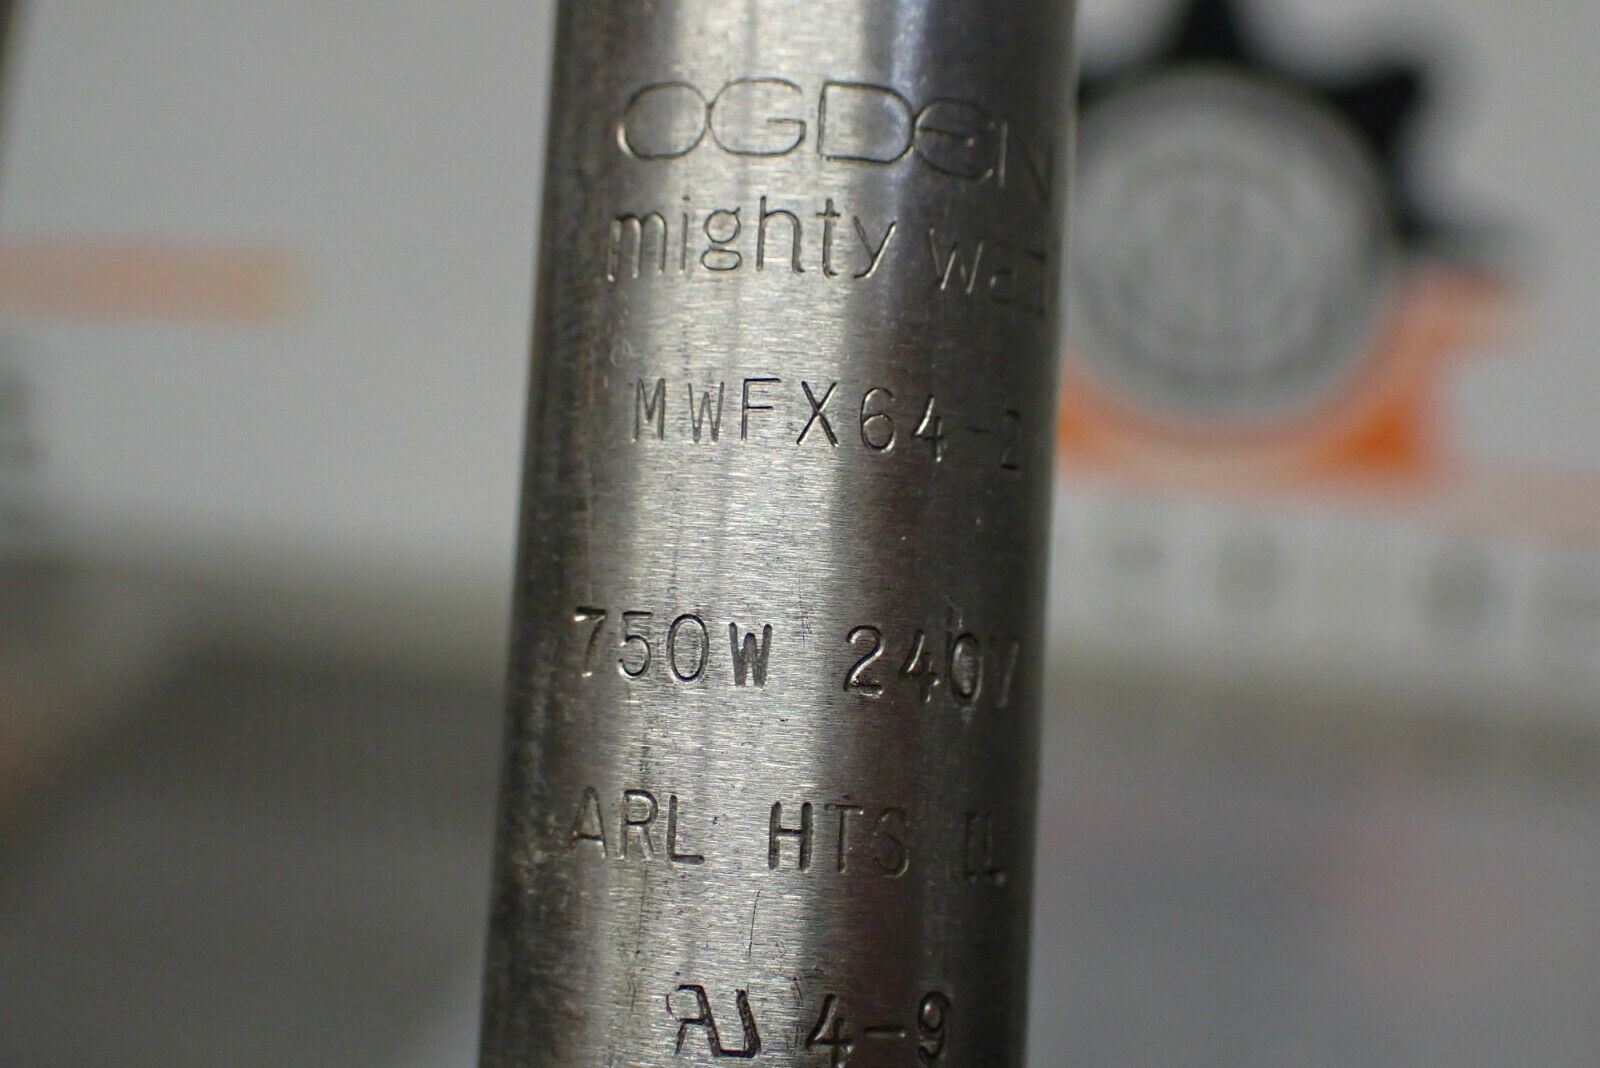 Ogden MWFX64-2 Mighty Watt 750W 240V Heater Cartridges New Old Stock (Lot of 2) Ogden MWFX64-2 - фотография #8